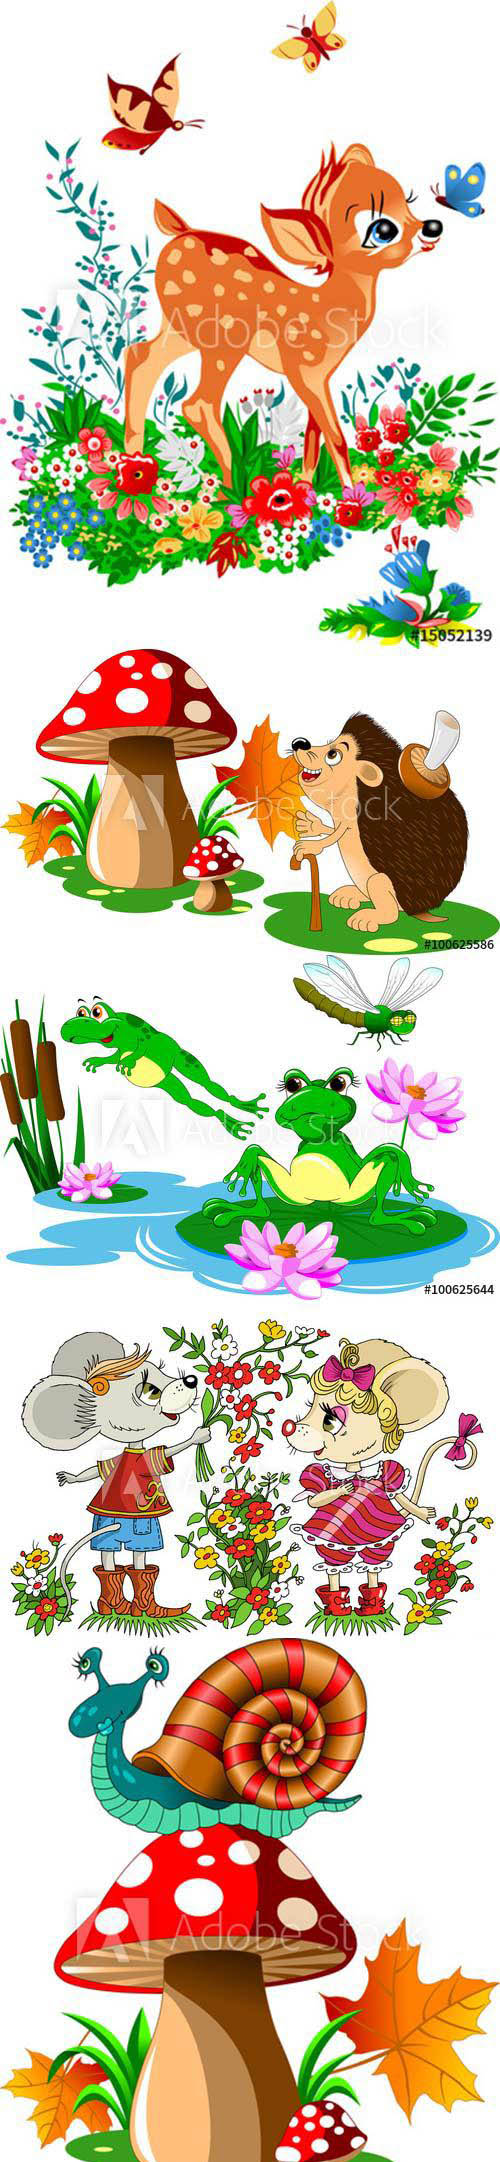 Cartoon vector illustration with animals